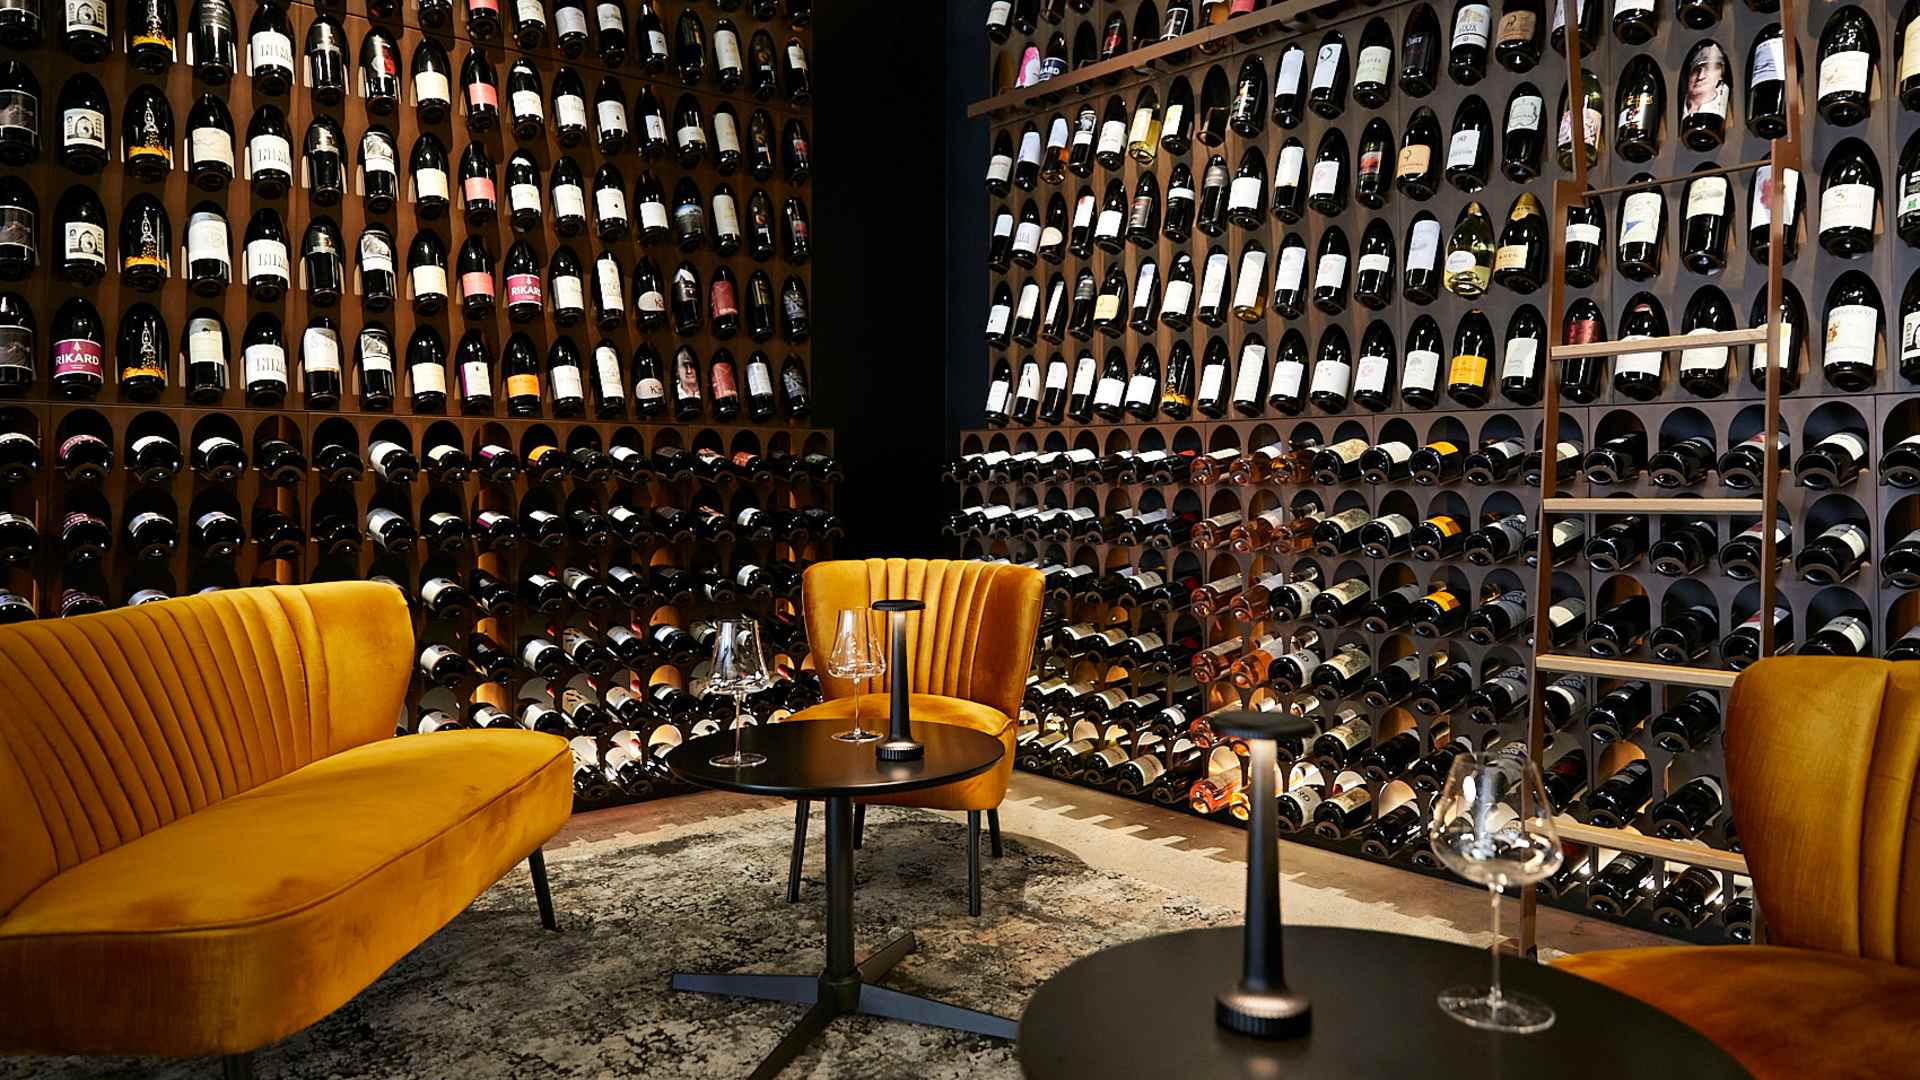 Vini Divini - one of the best wine bars in the Sydney CBD